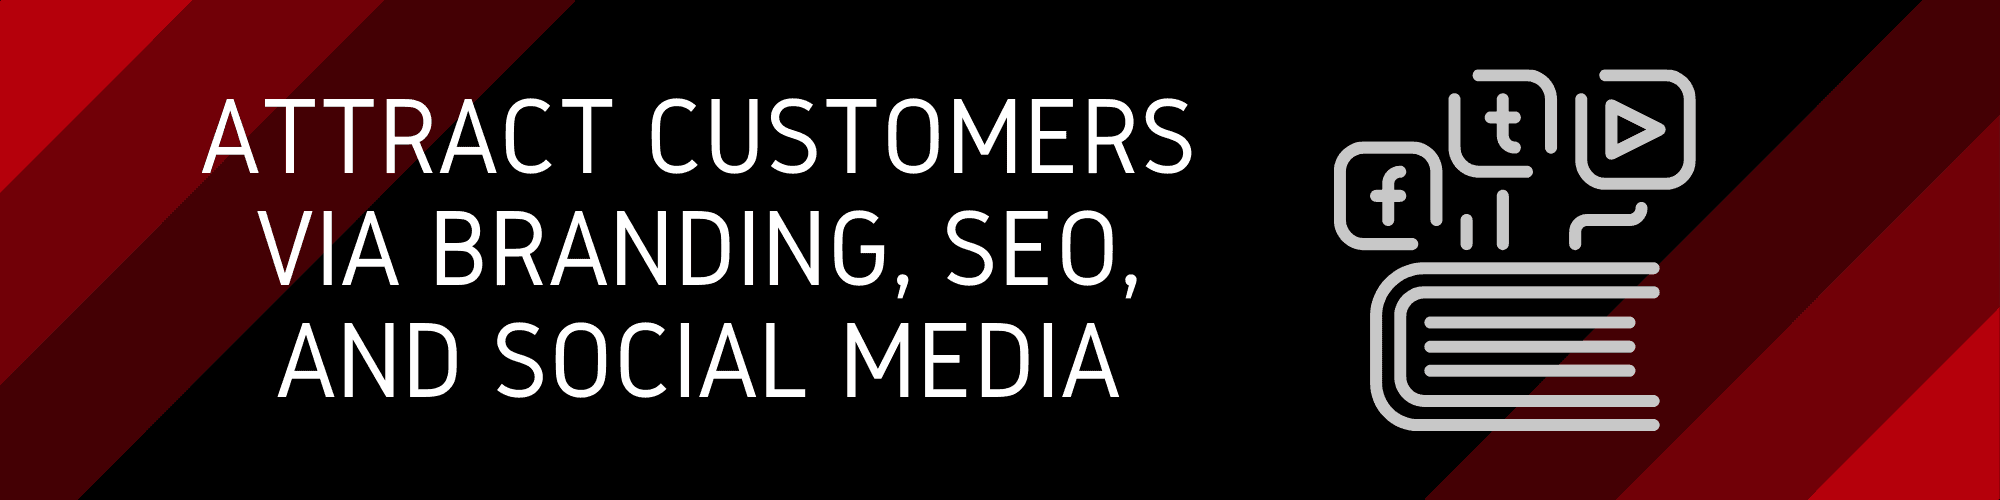 Attract Customers via branding, SEO and Social Media